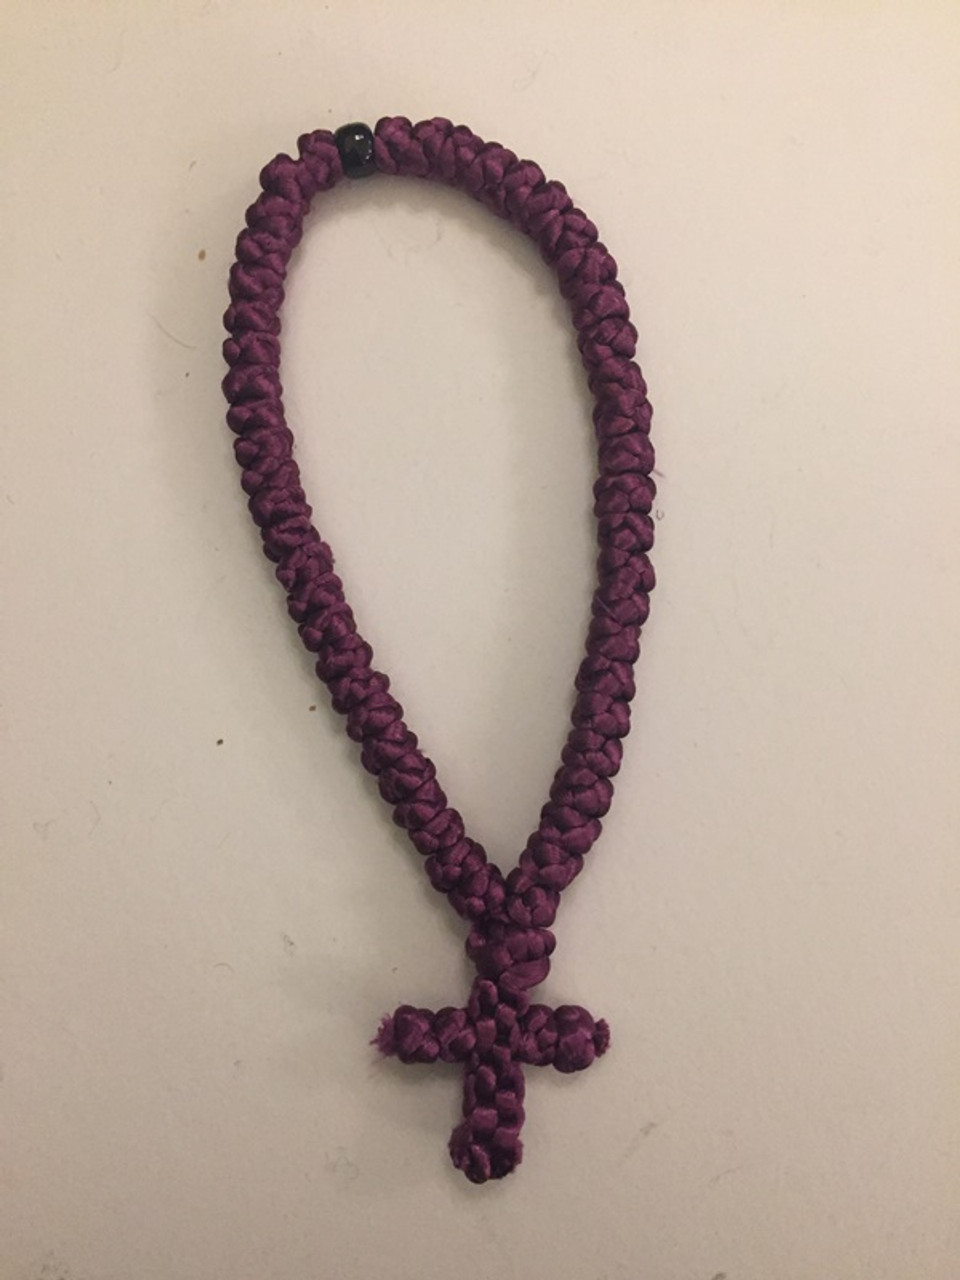 50 knot satin cord prayer rope